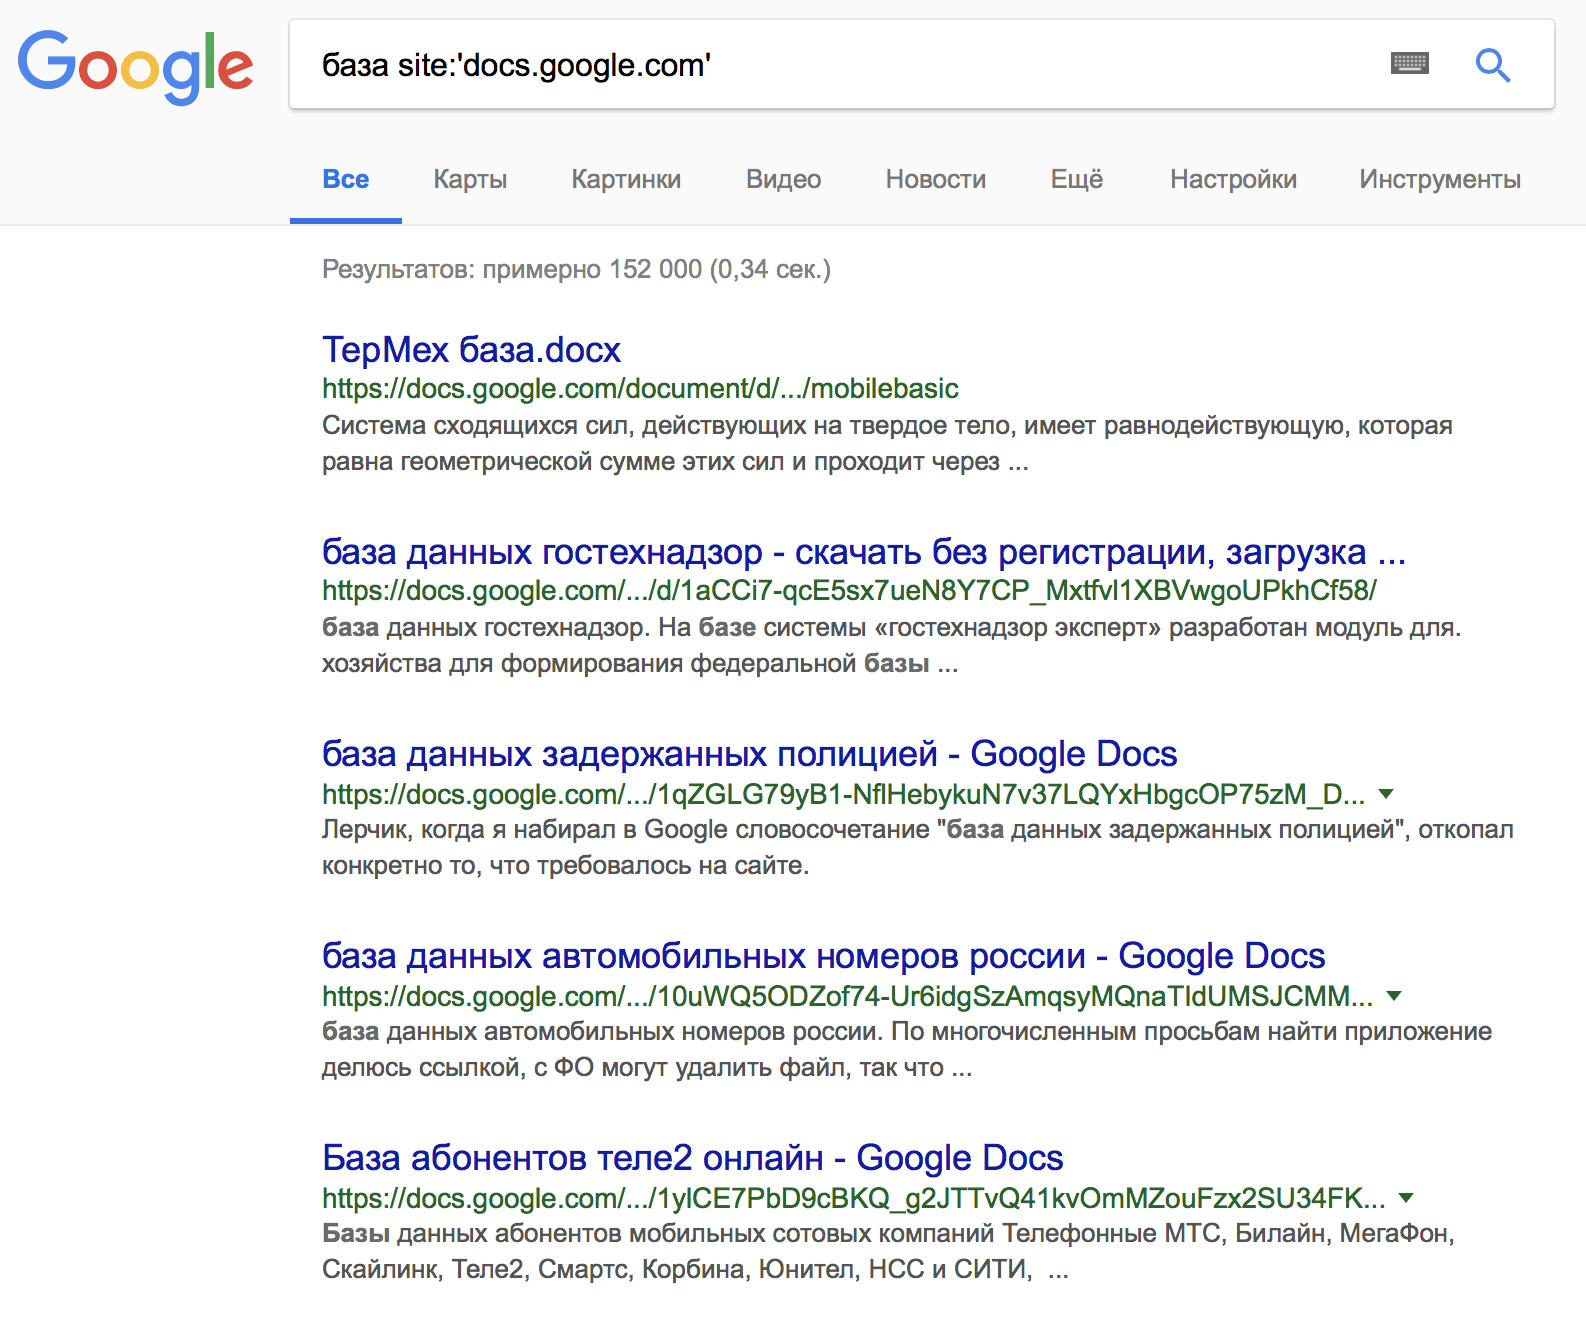 Гугл индексирует, но странно. Похоже на развод и рекламу